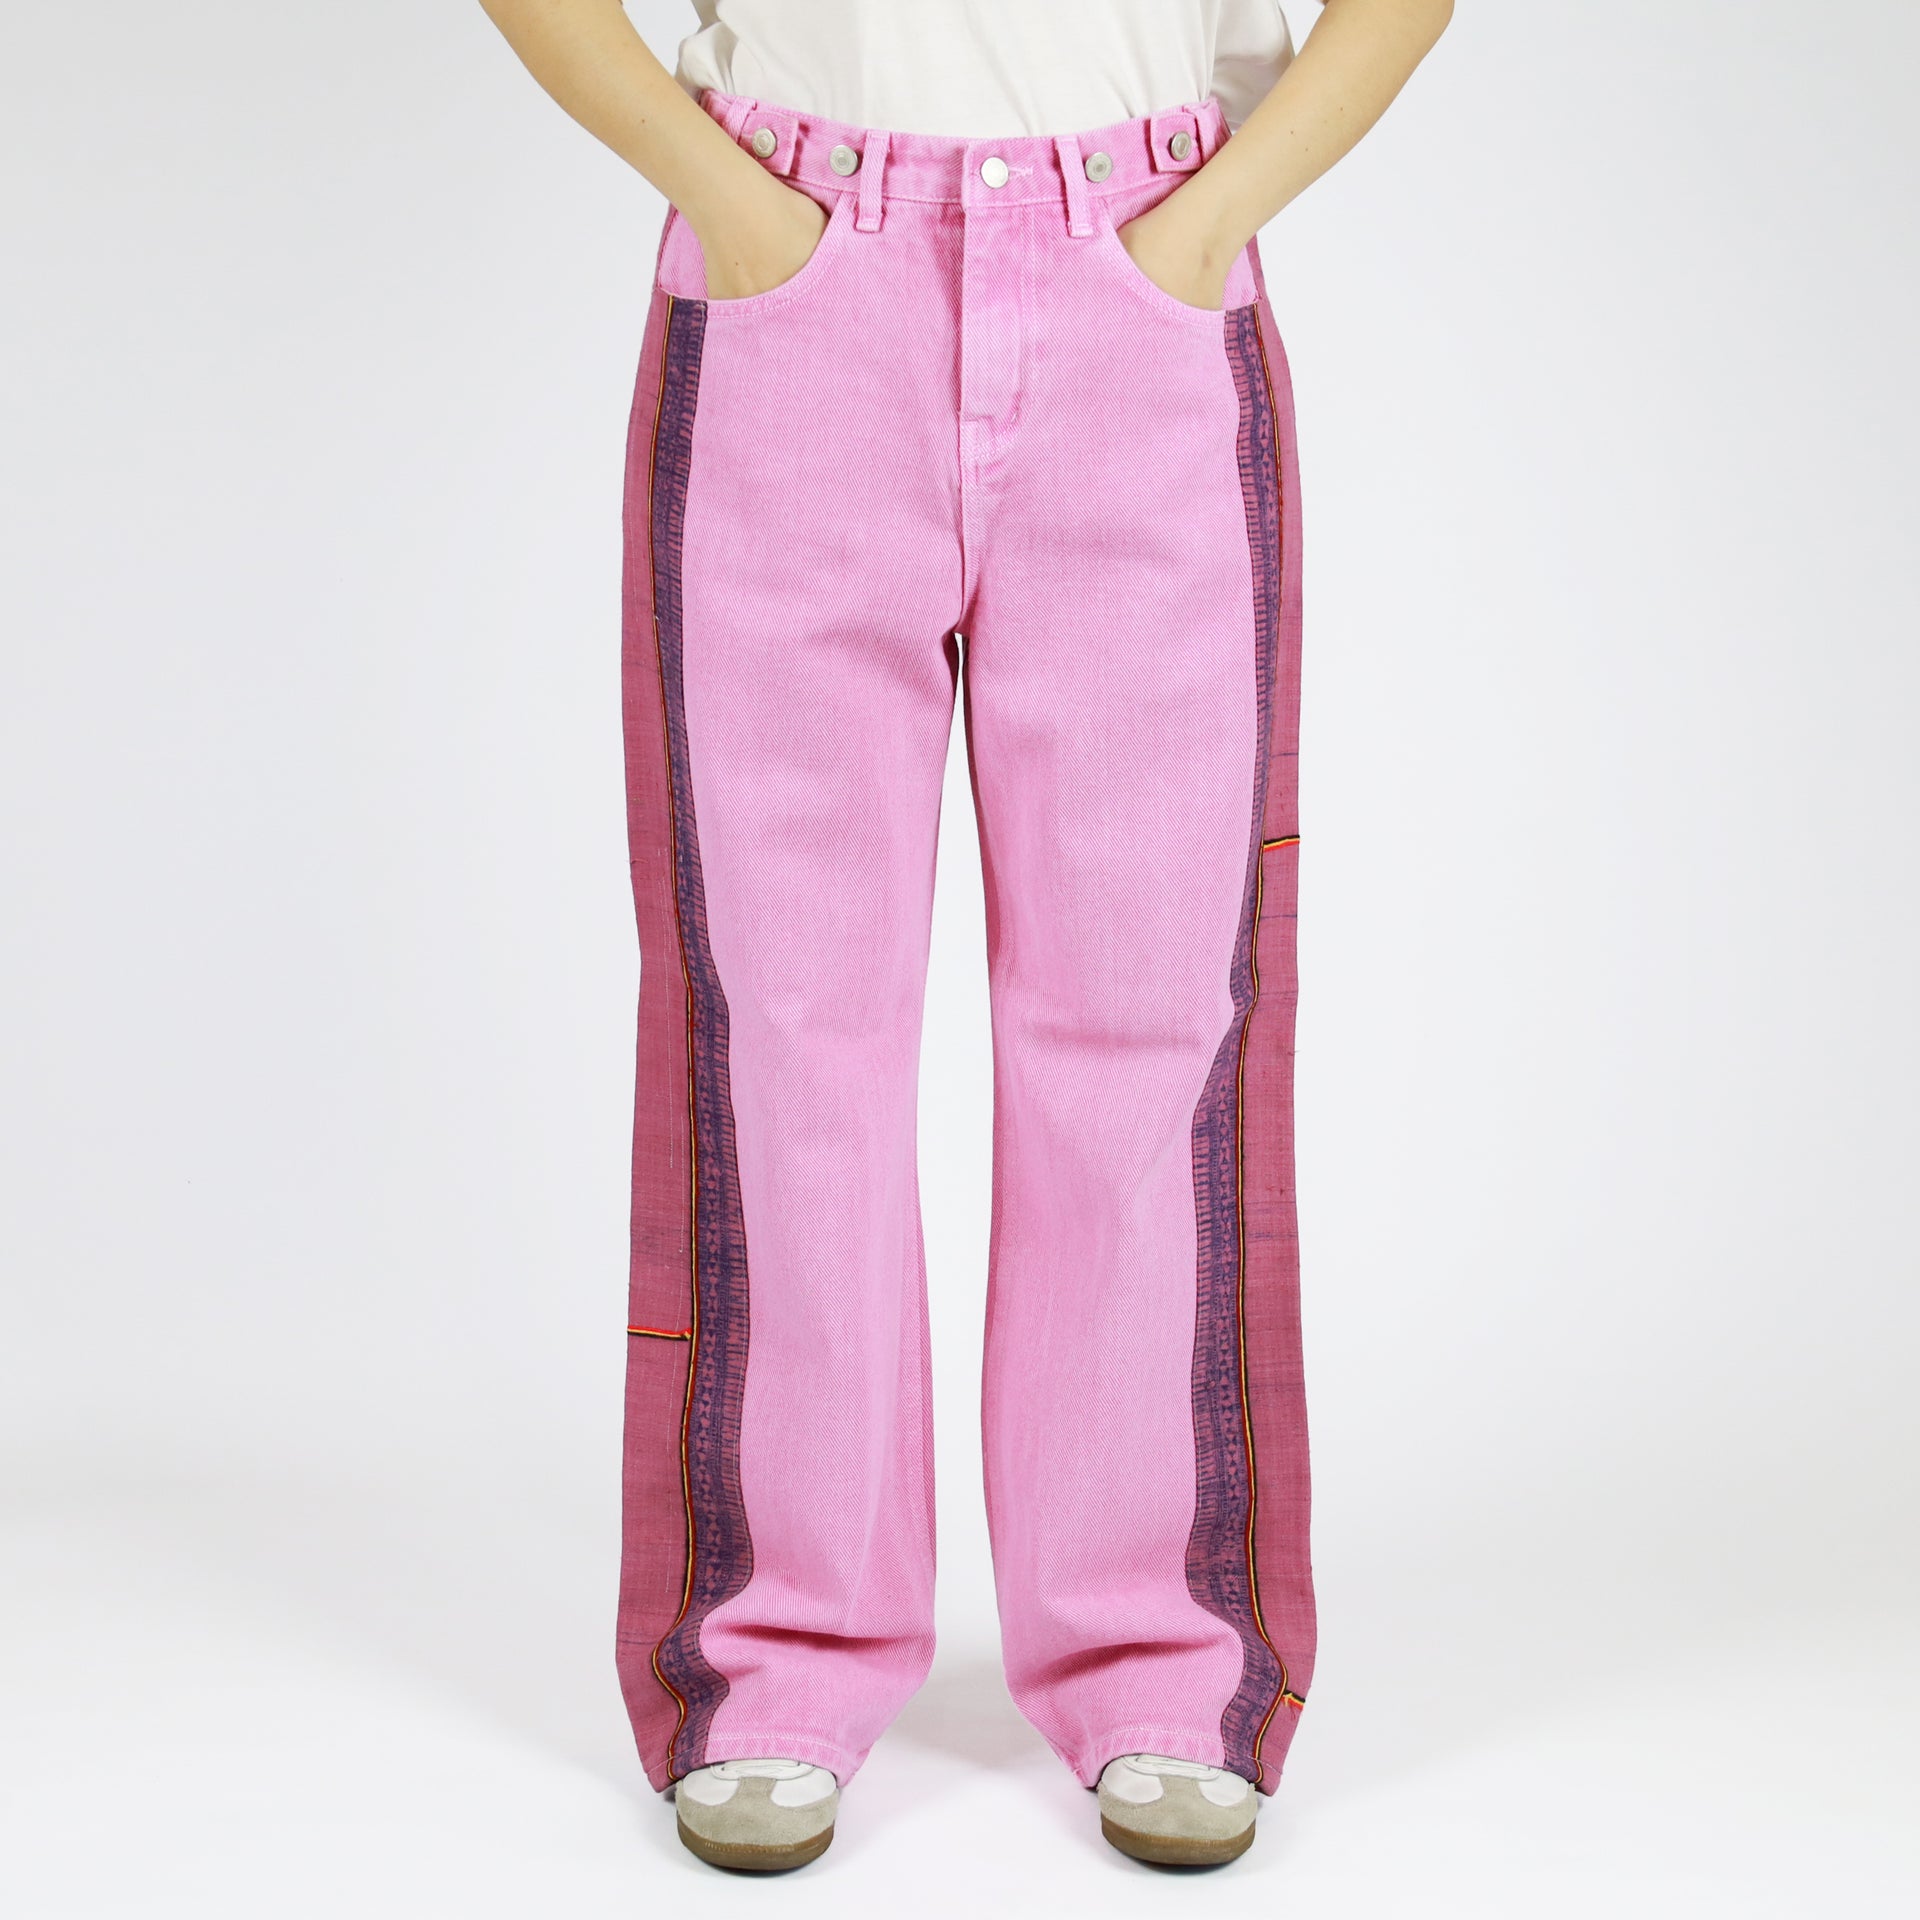 The Pink Bangkok Jeans